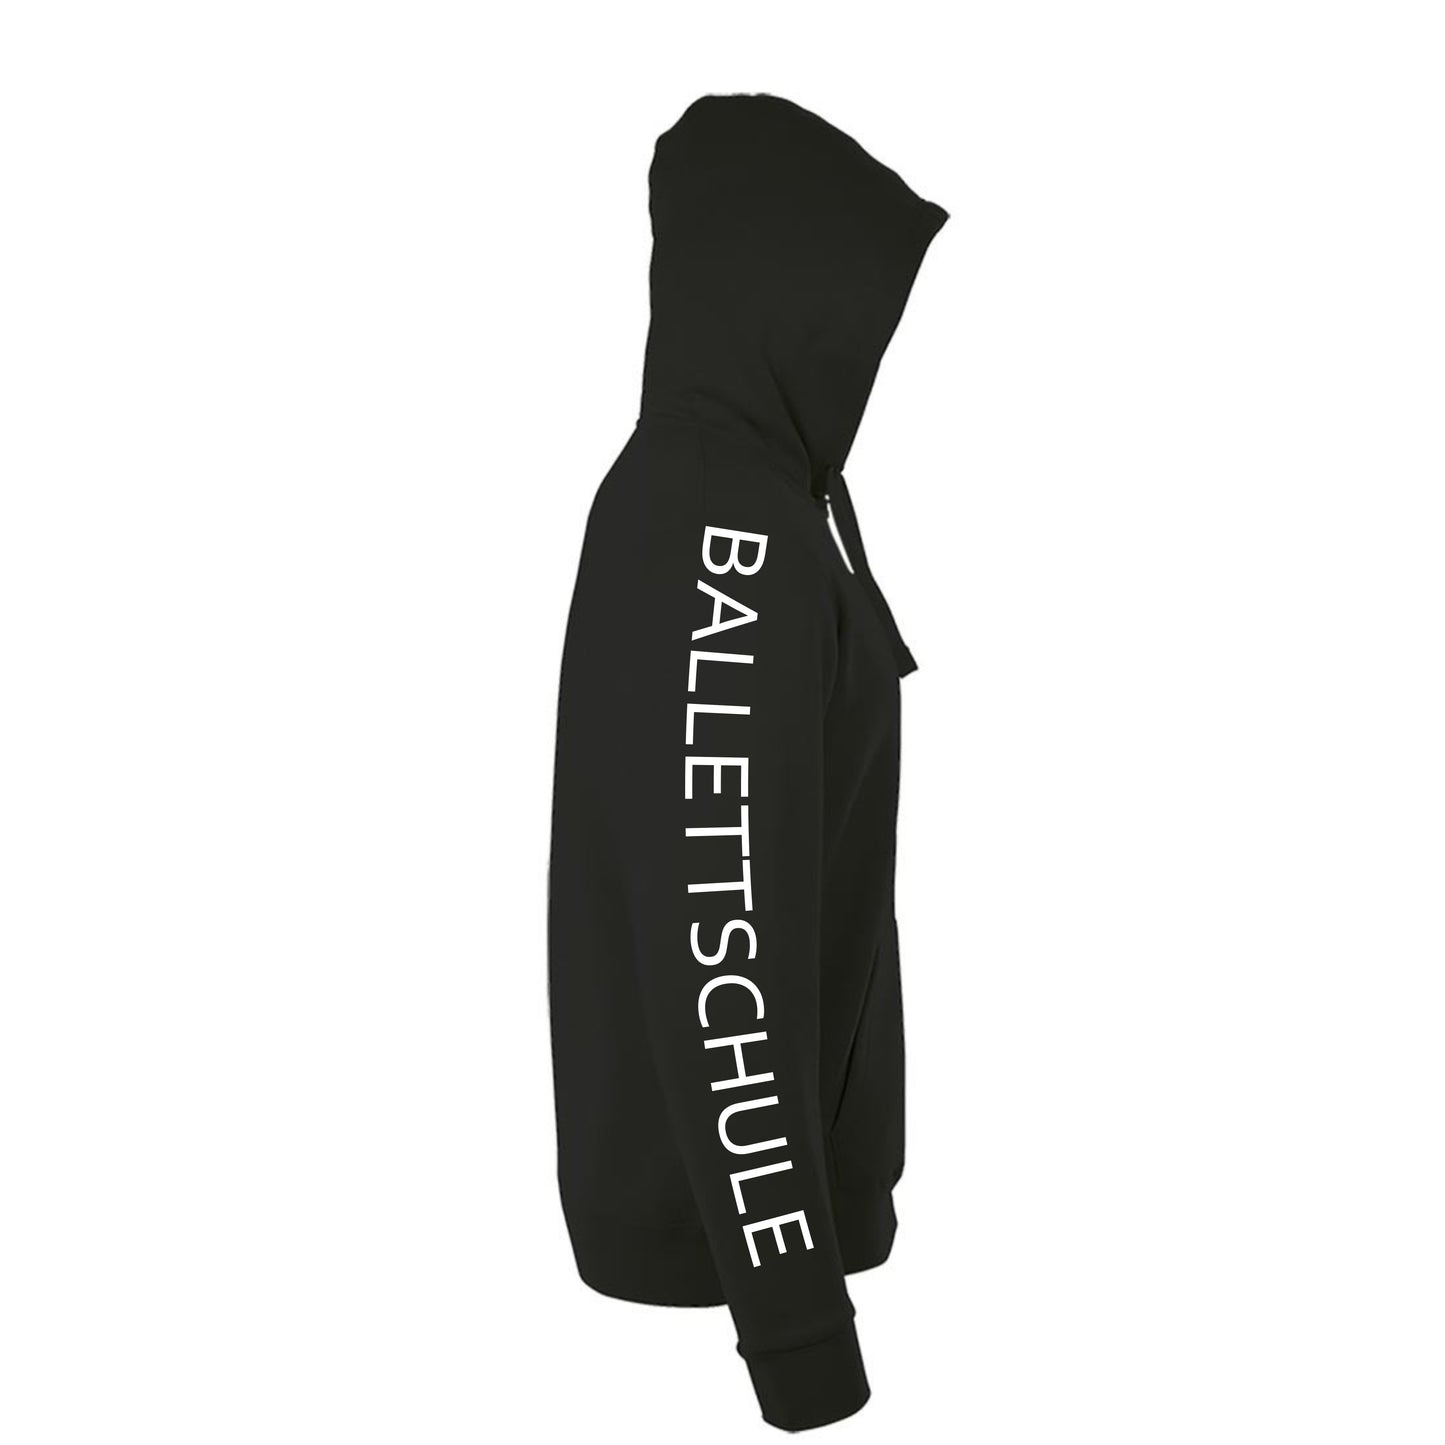 Sweatshirt-Jacke  "Ballettschule" schwarz